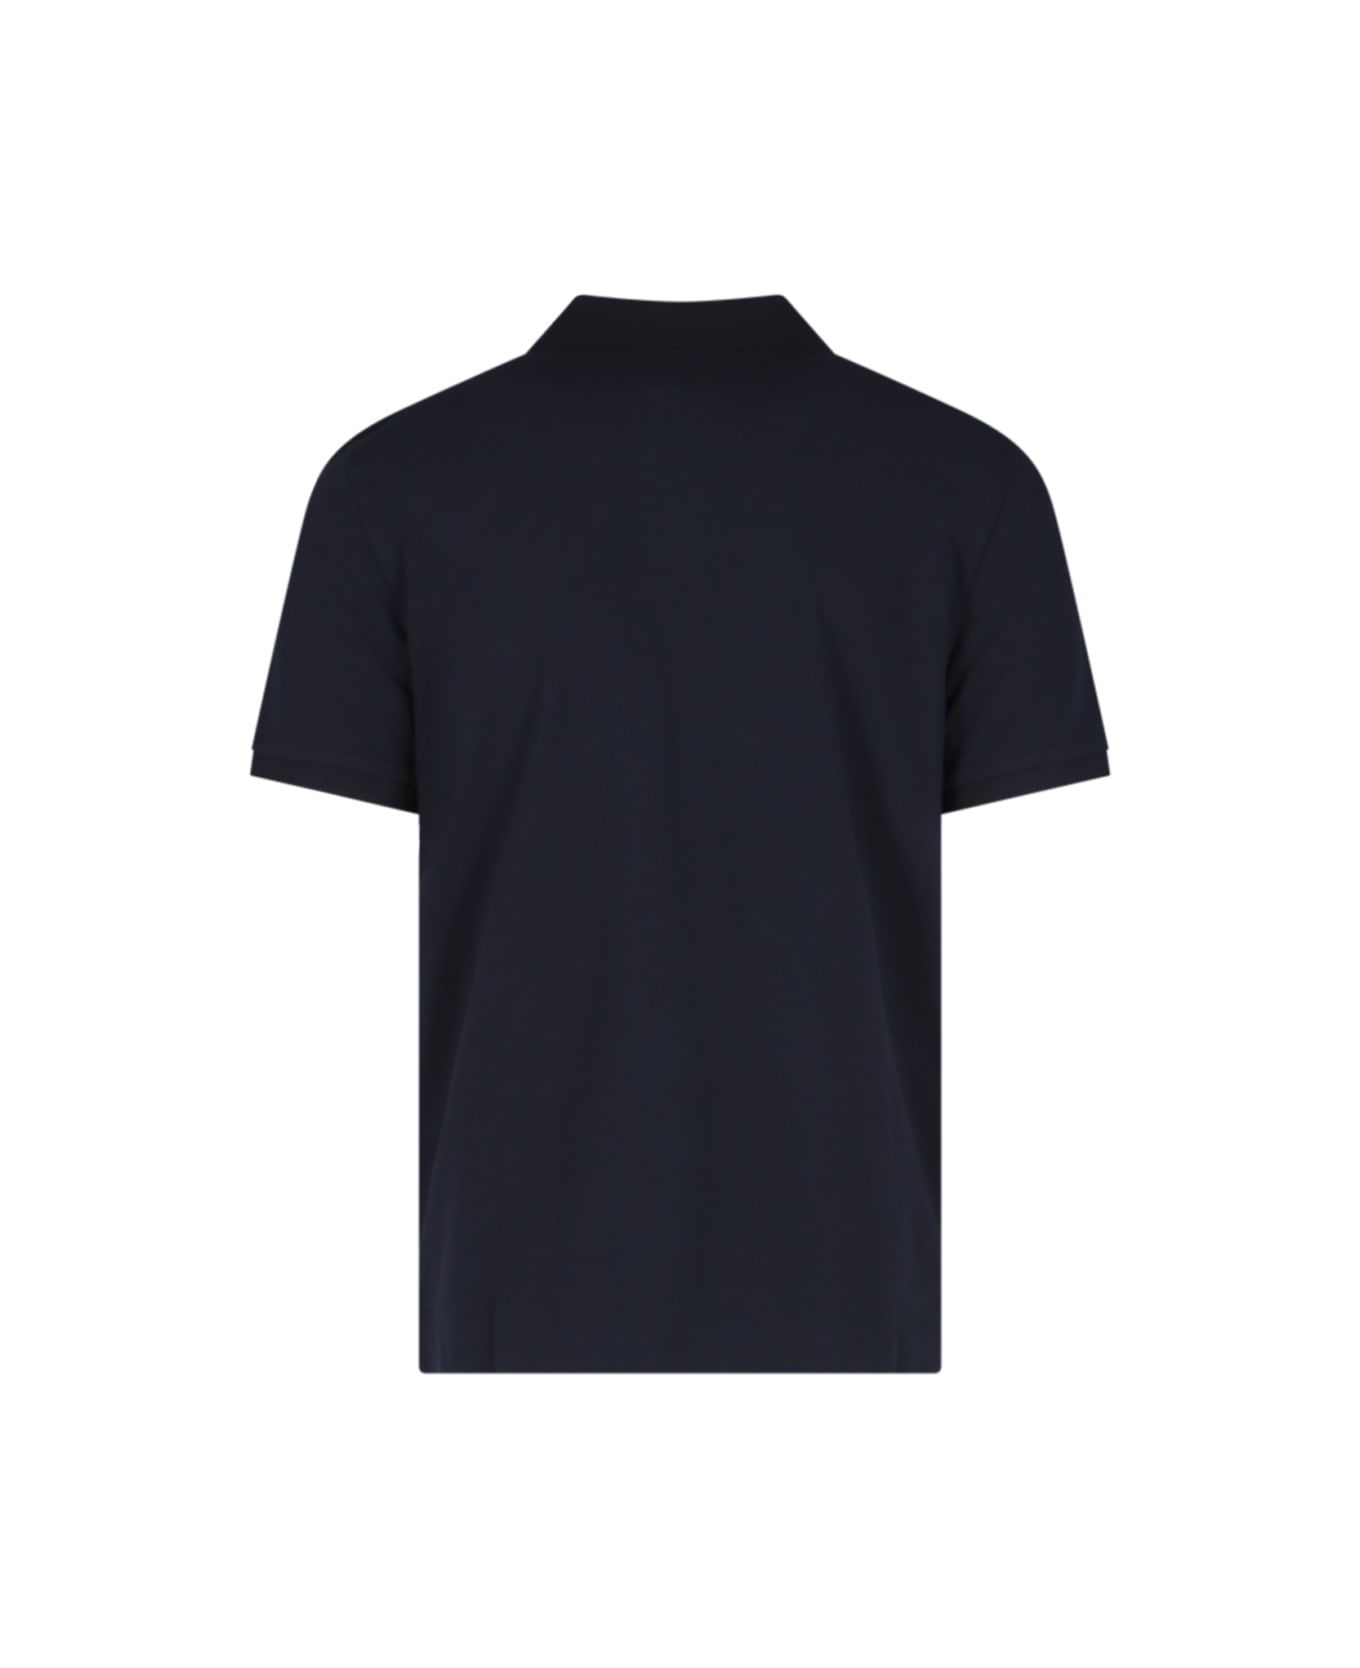 C.P. Company Logo Polo Shirt - Blue ポロシャツ